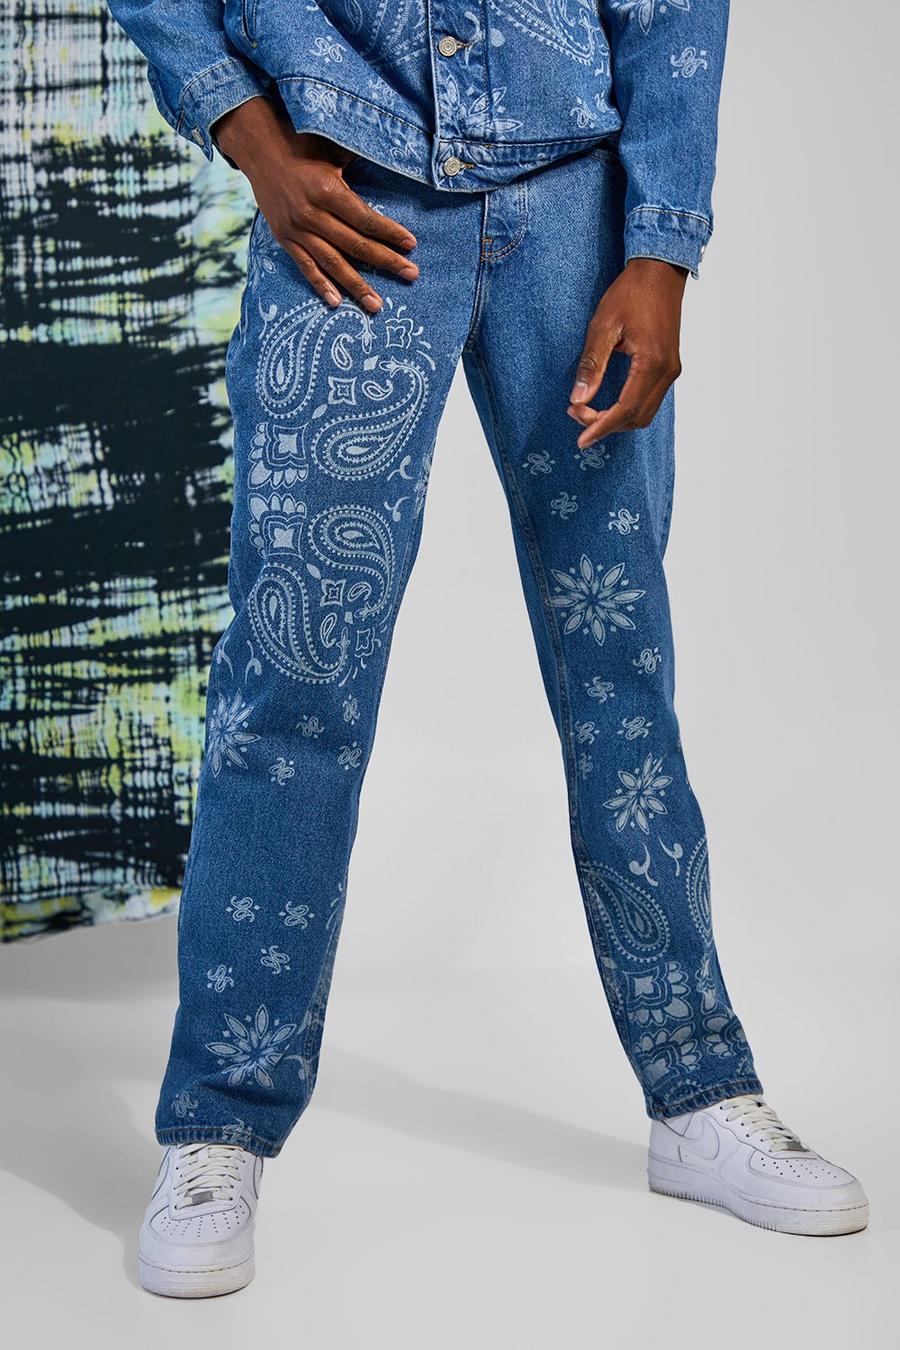 totaal Interpretatie linnen Relaxed Fit Paisley Jeans | boohoo